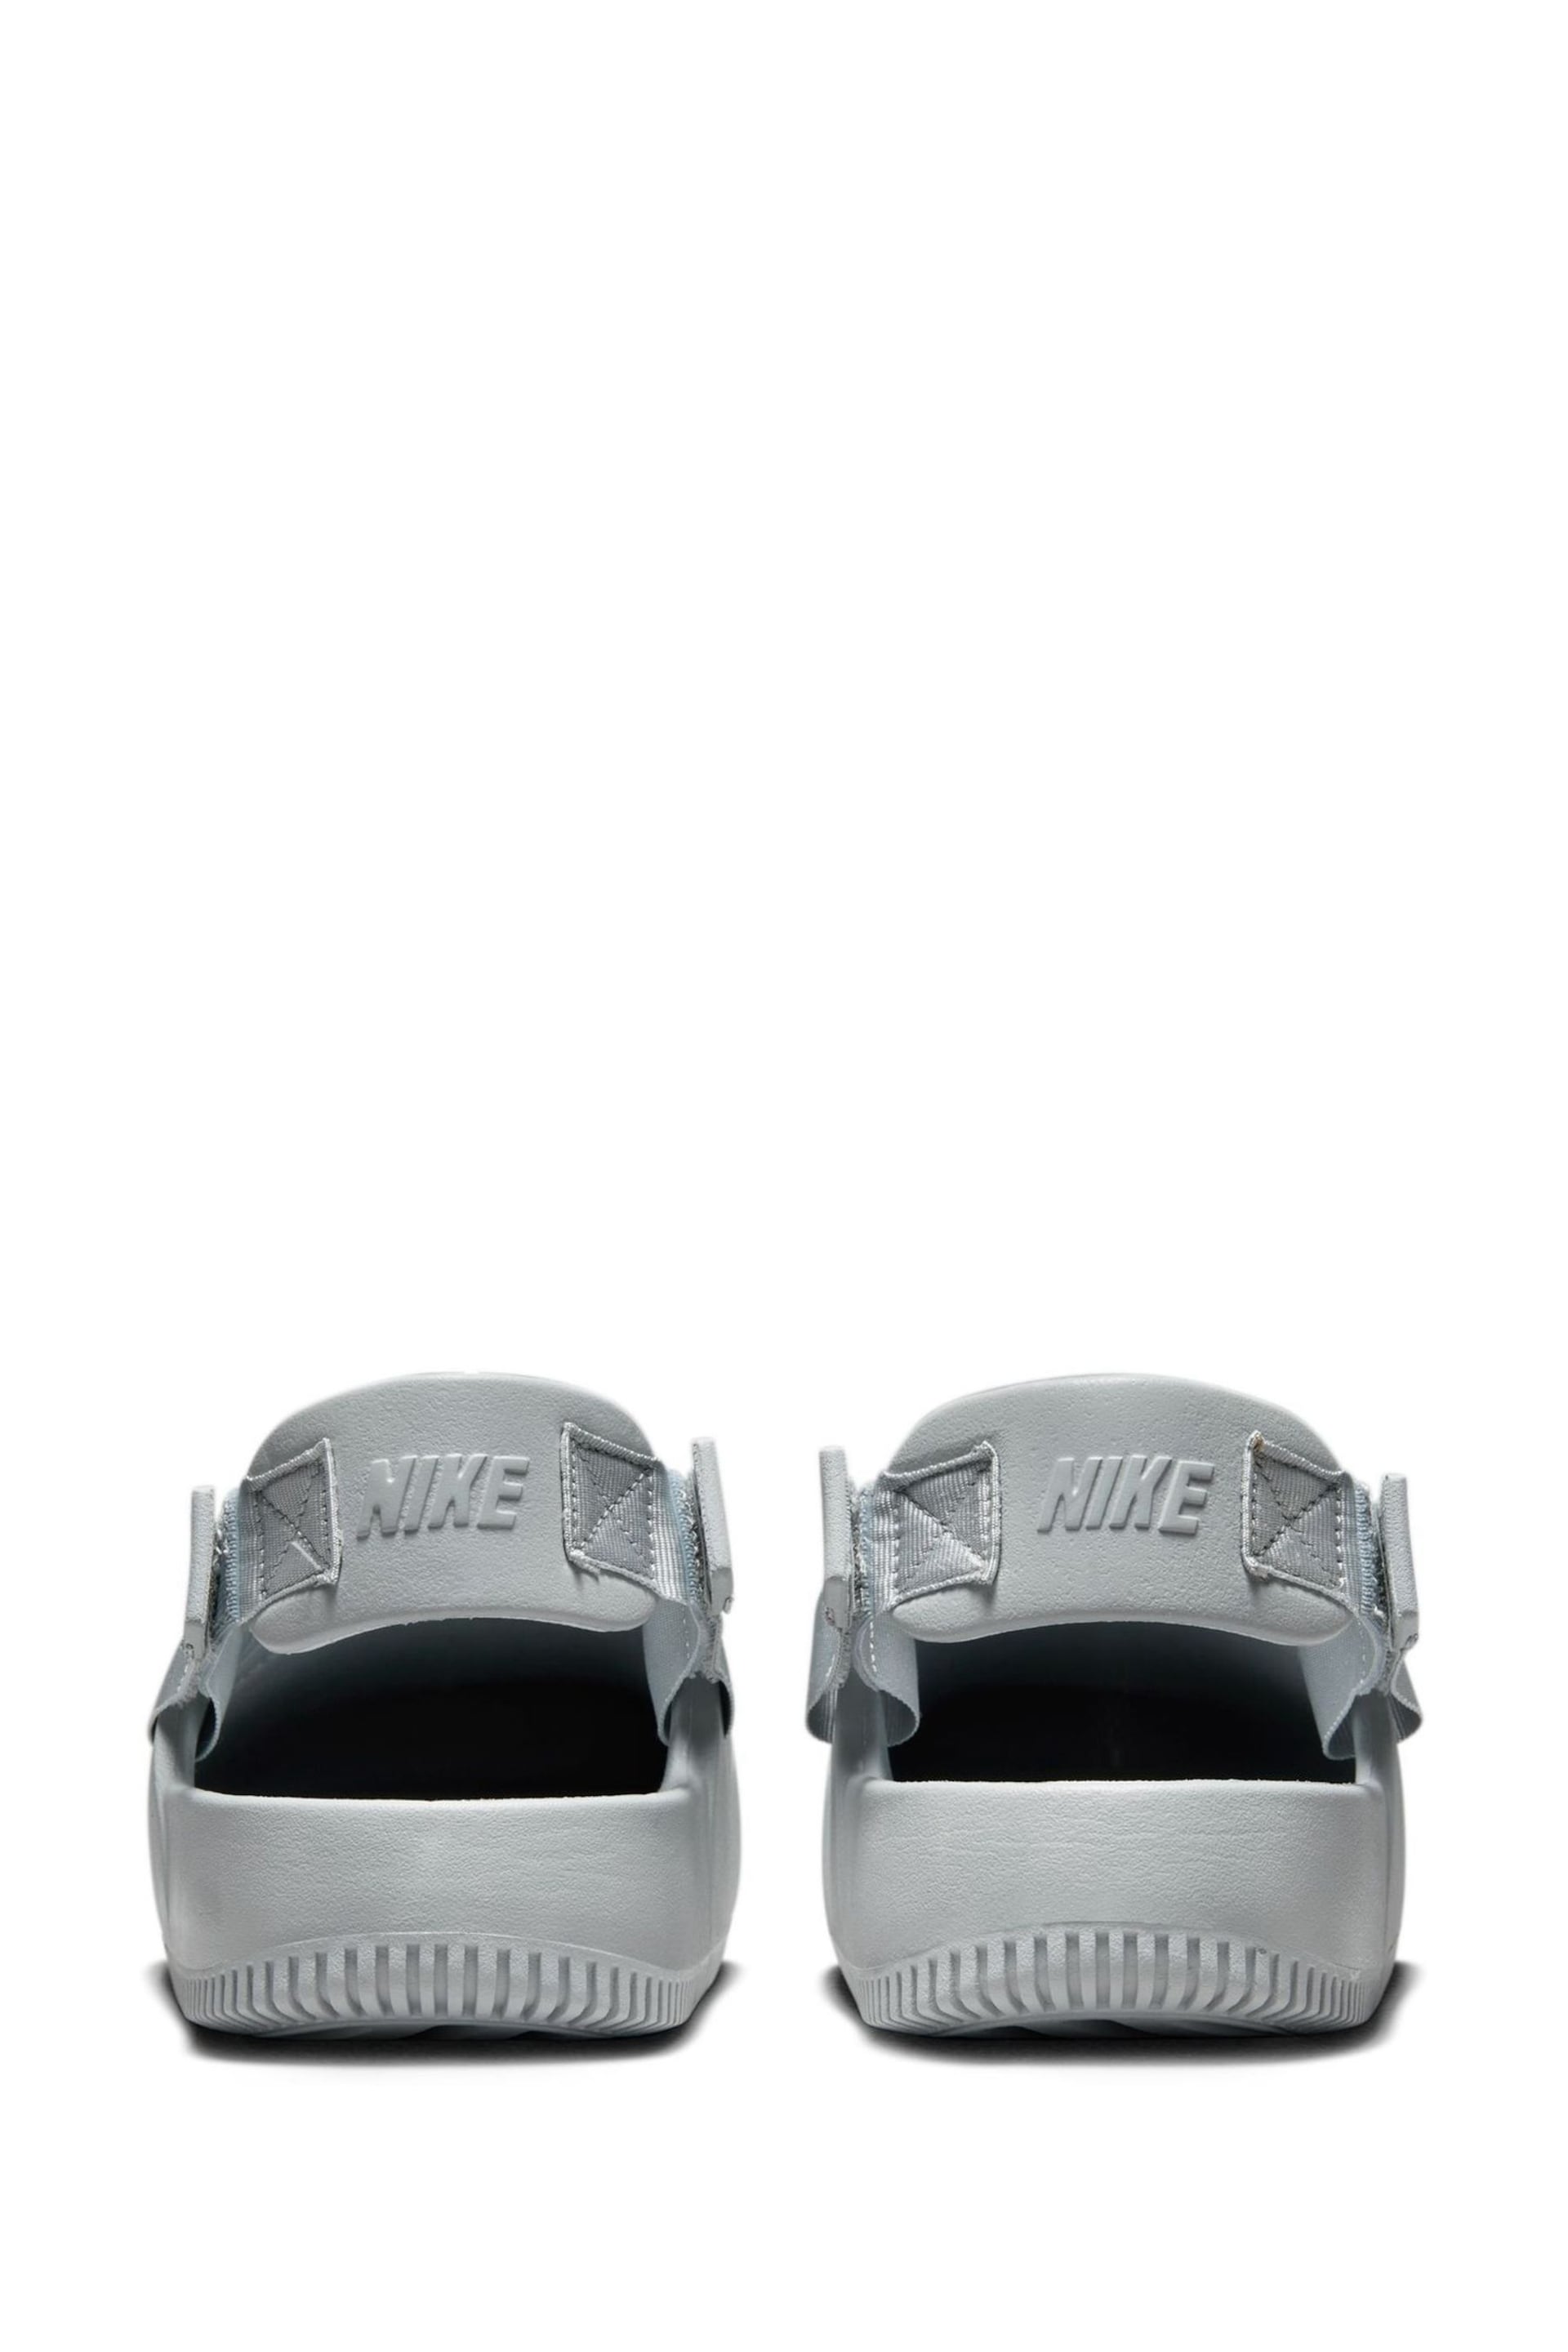 Nike Grey Calm Mules Sliders - Image 6 of 12